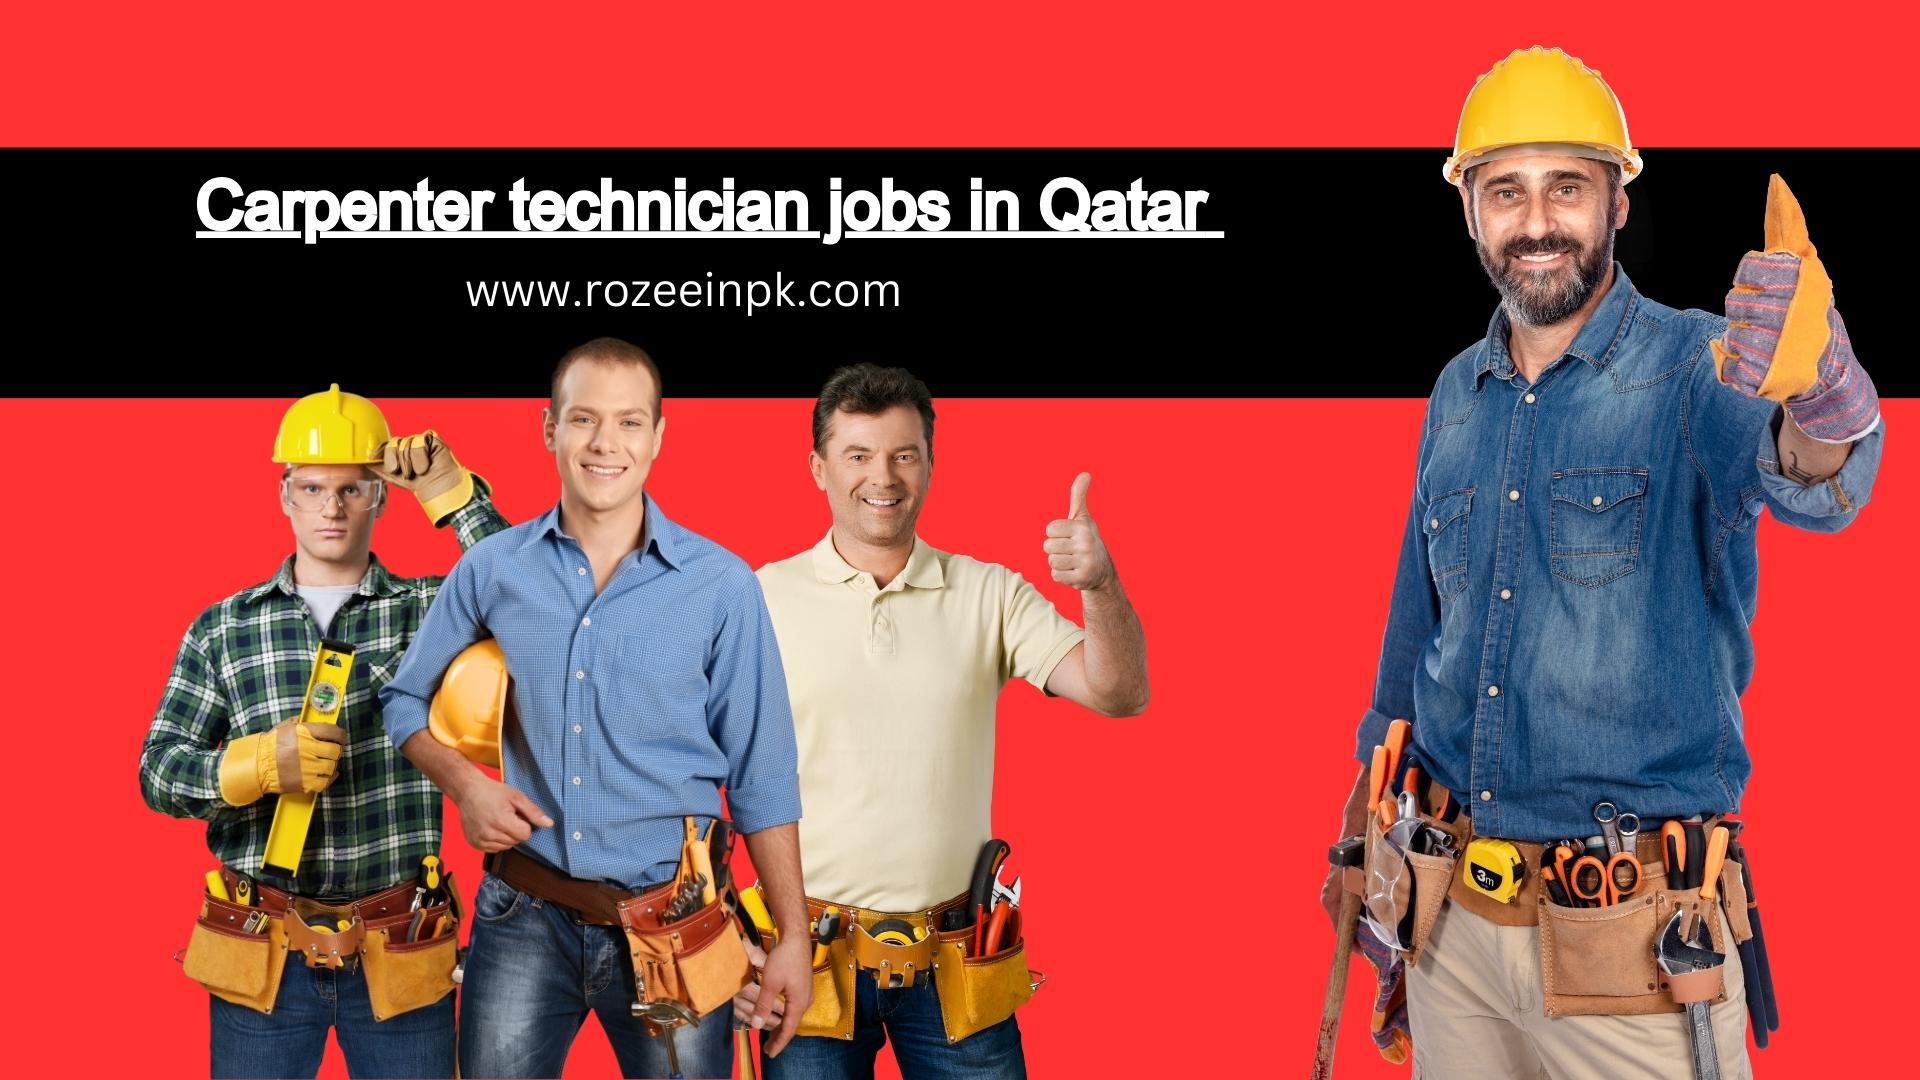 Carpenter technician jobs in Qatar 